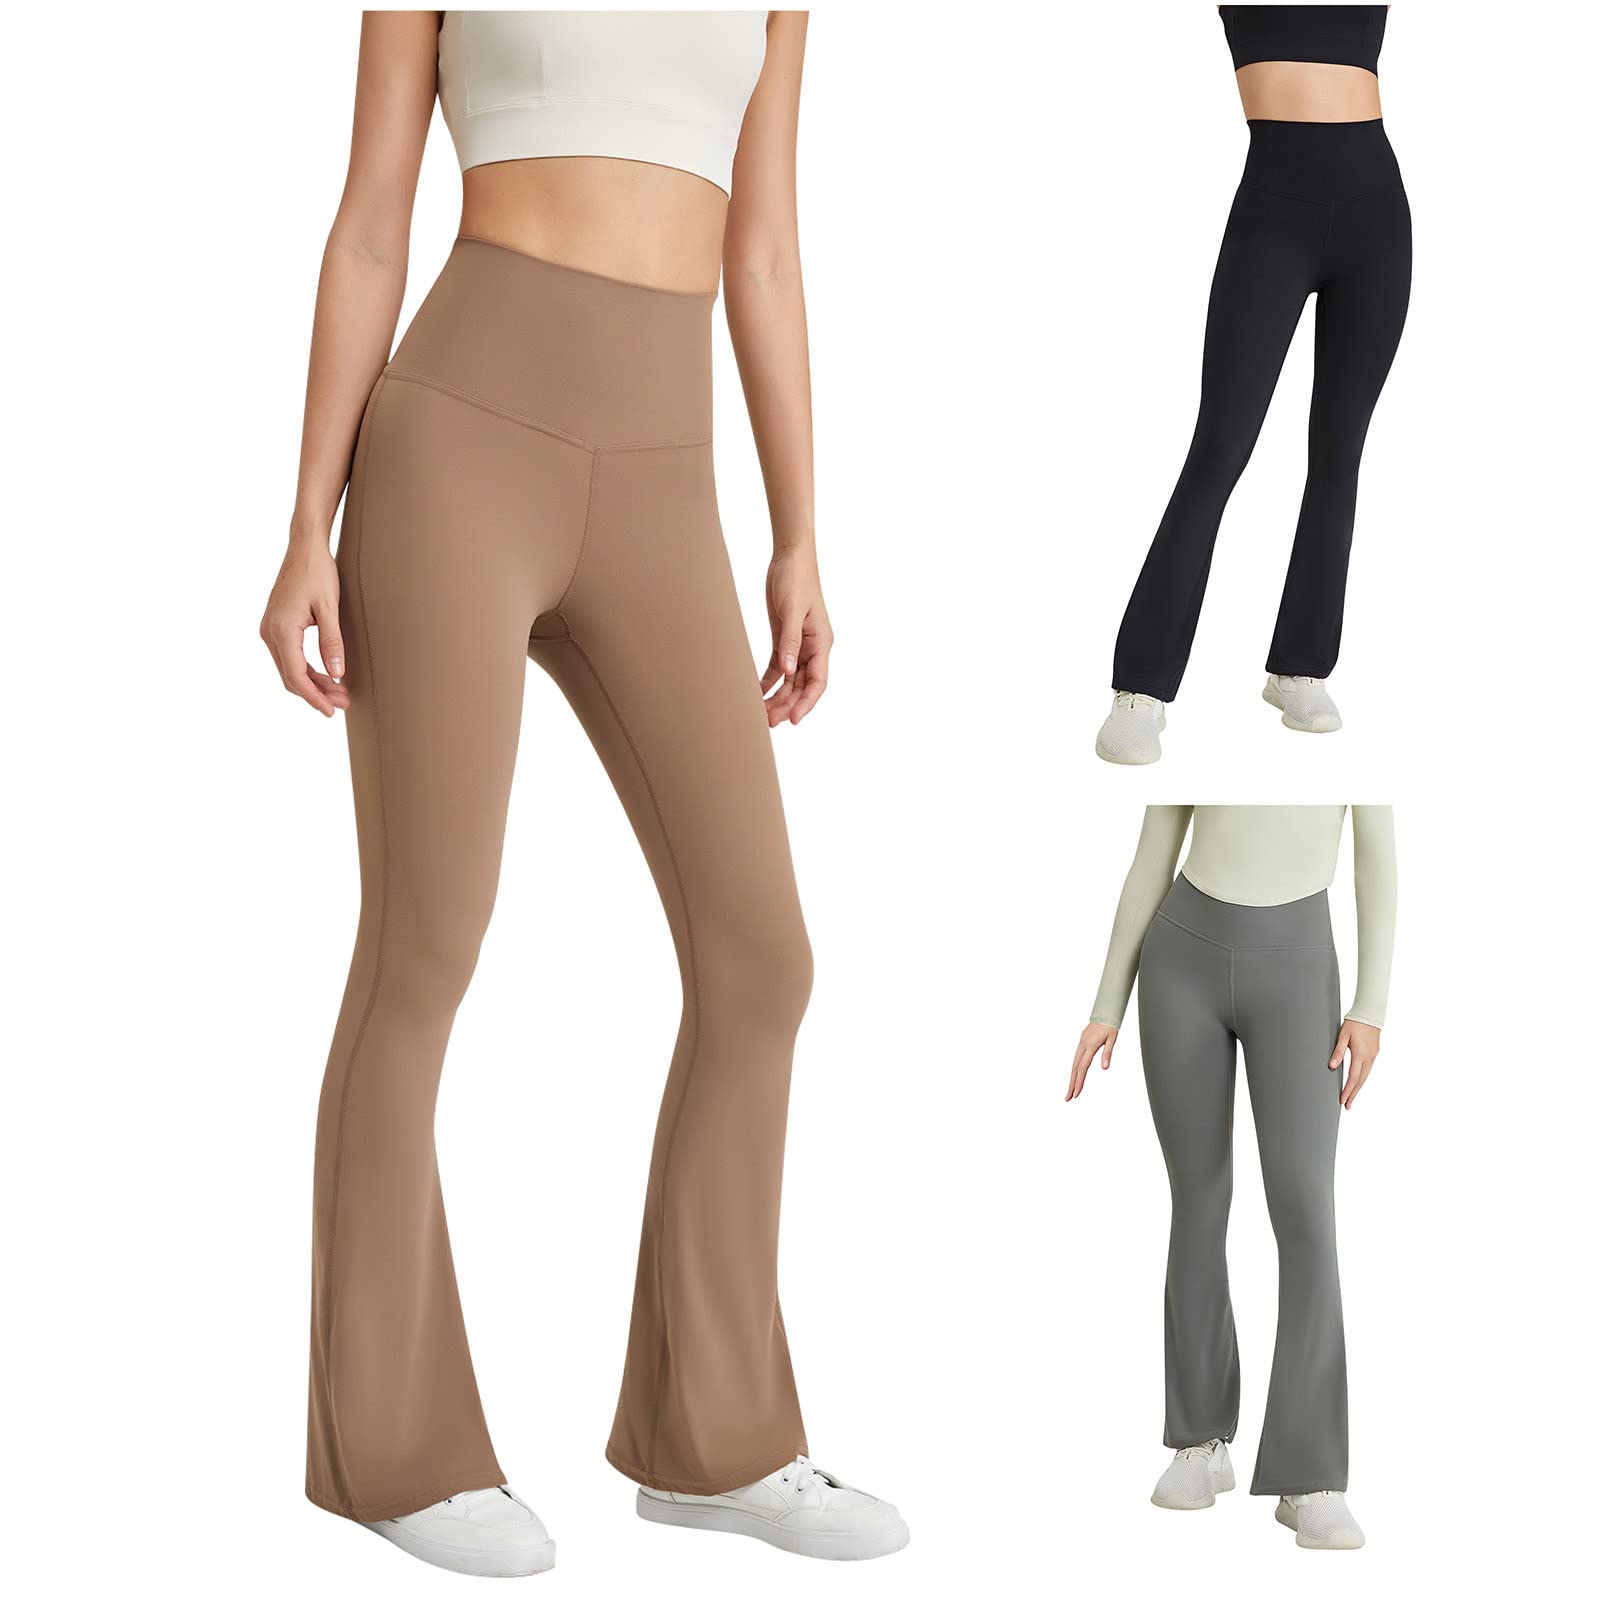 ESCBUKI Flare Yoga Pants for Women High Waist Solid Color Tummy Control  Sweatpants Casual Gym Workout Workout Pants Small Black Yoga Pants